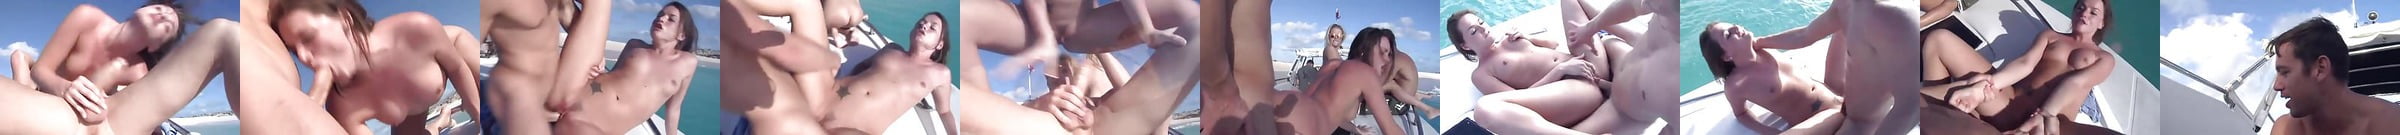 Yacht Porn Videos Classy Girls Fuck On Boats Xhamster